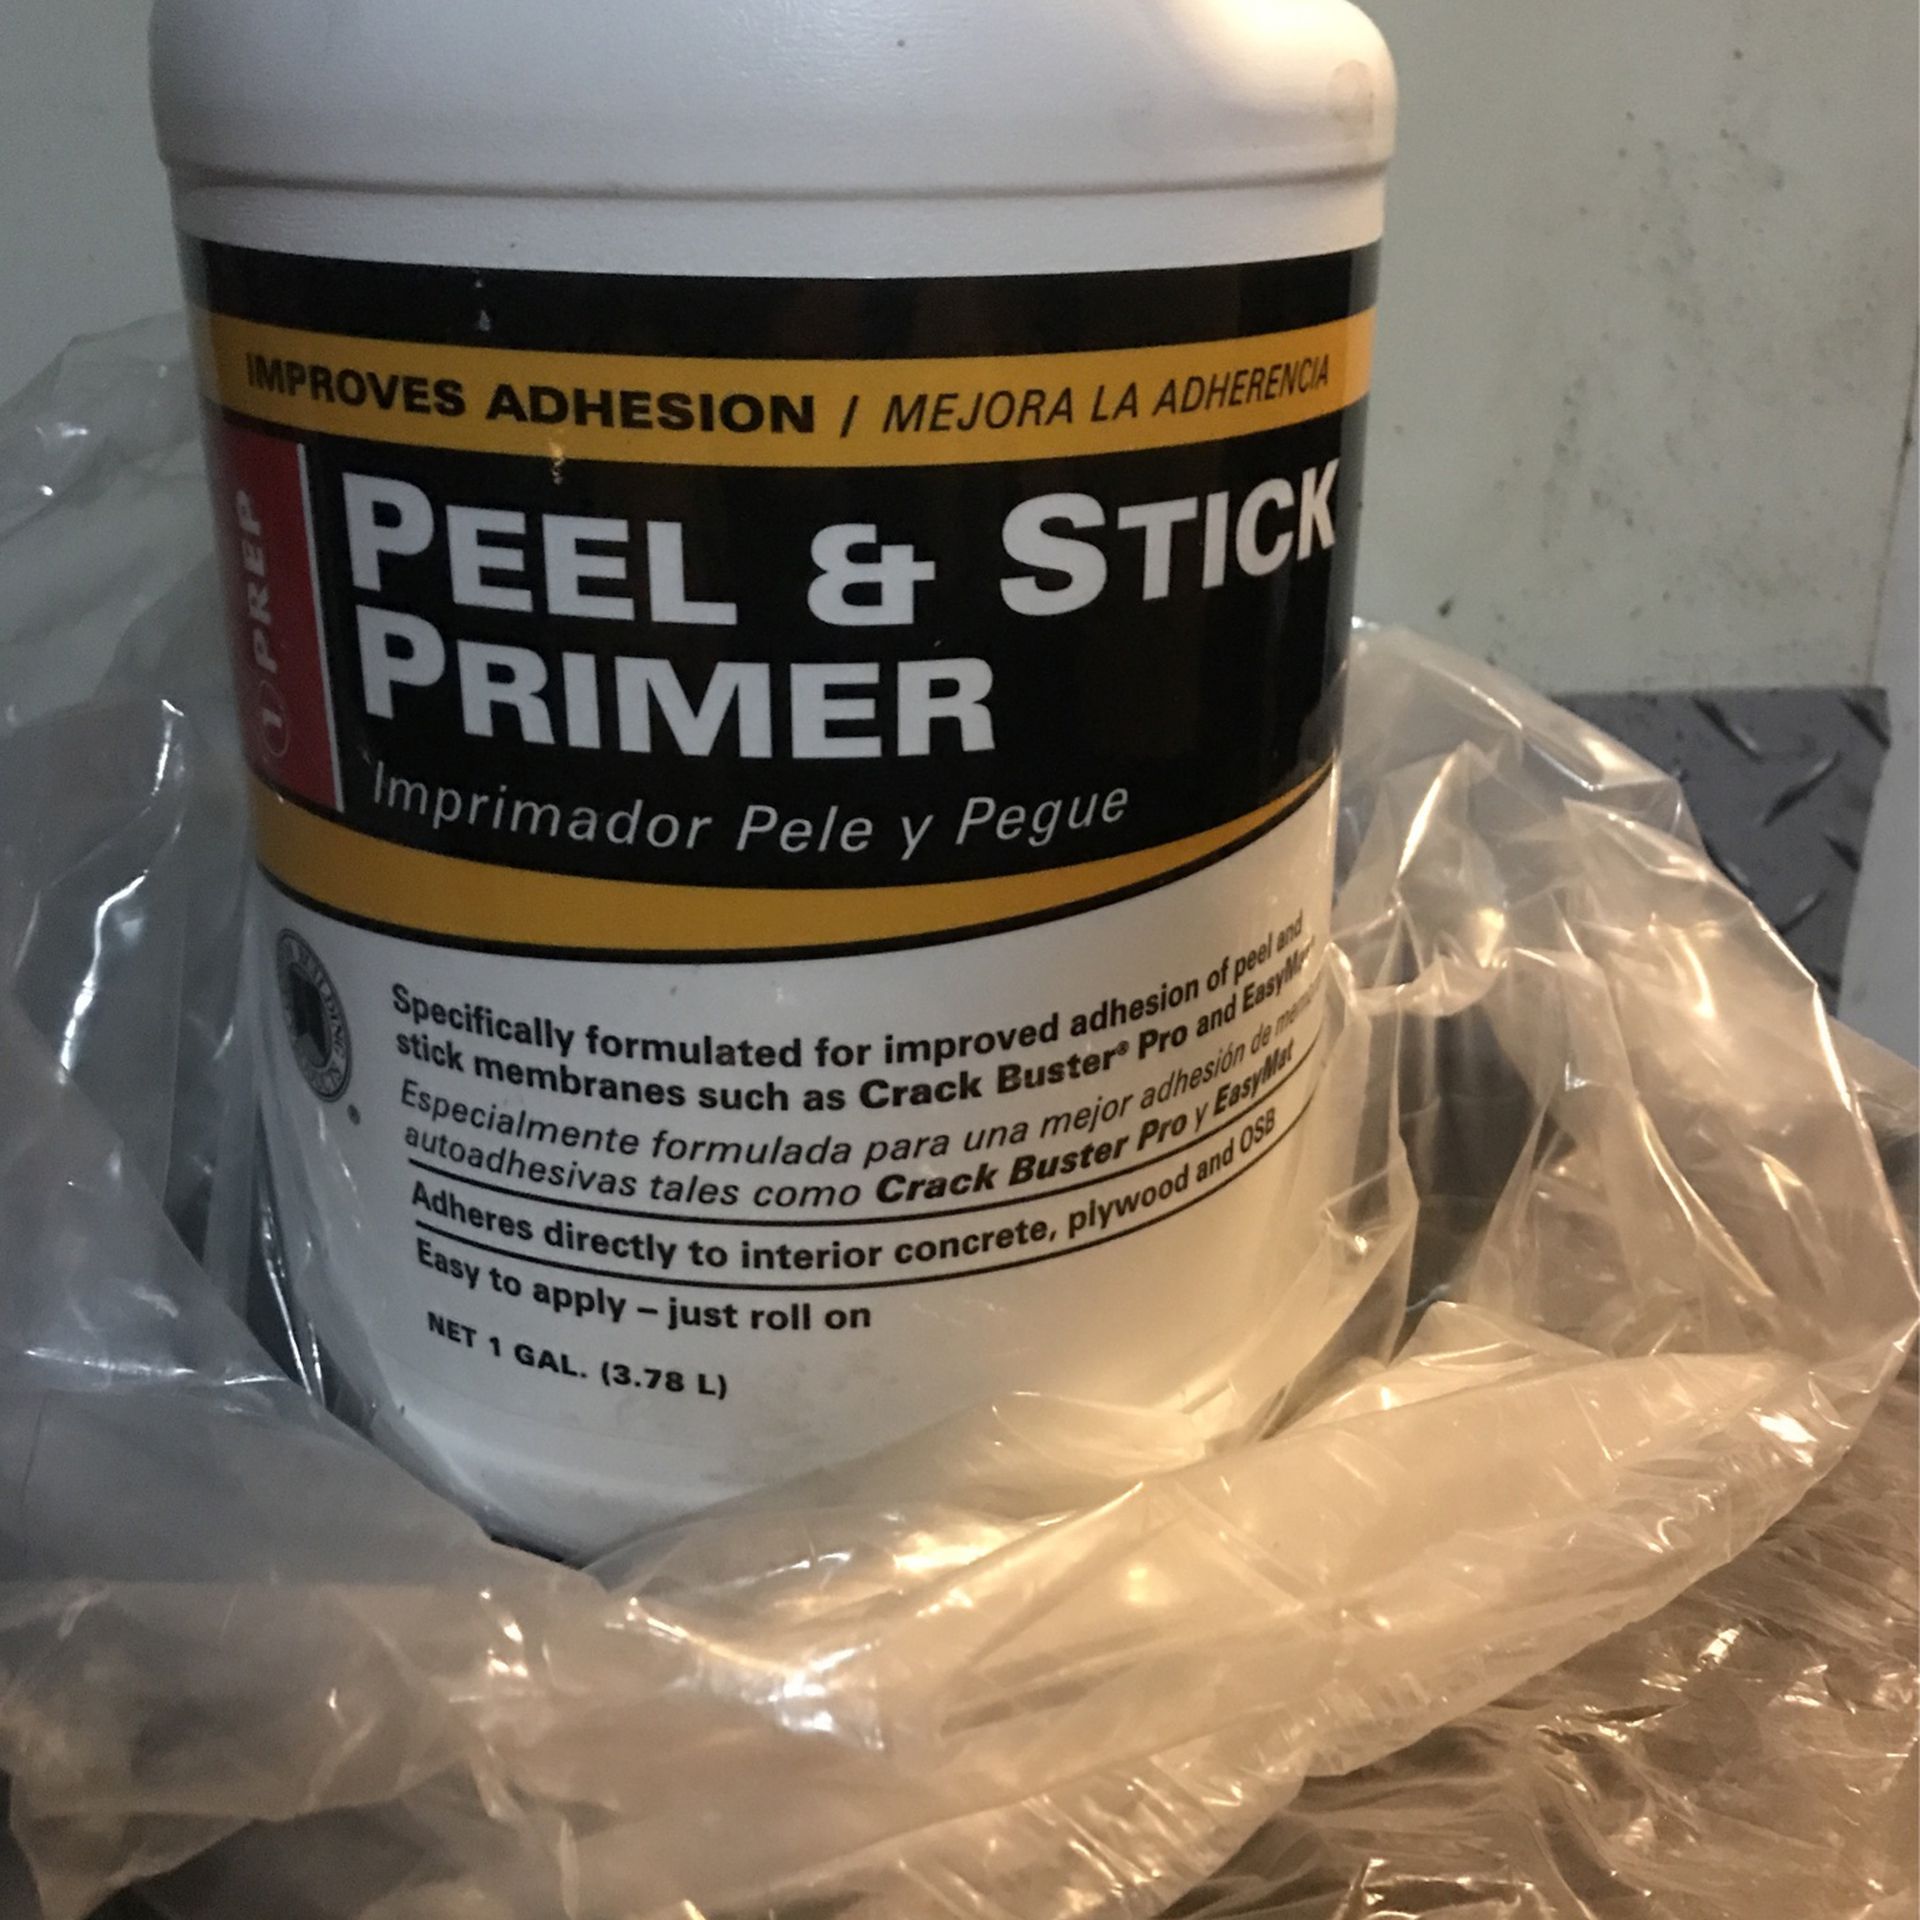 Peel & Stick Primer - Step 1 (Improves Adhesion)